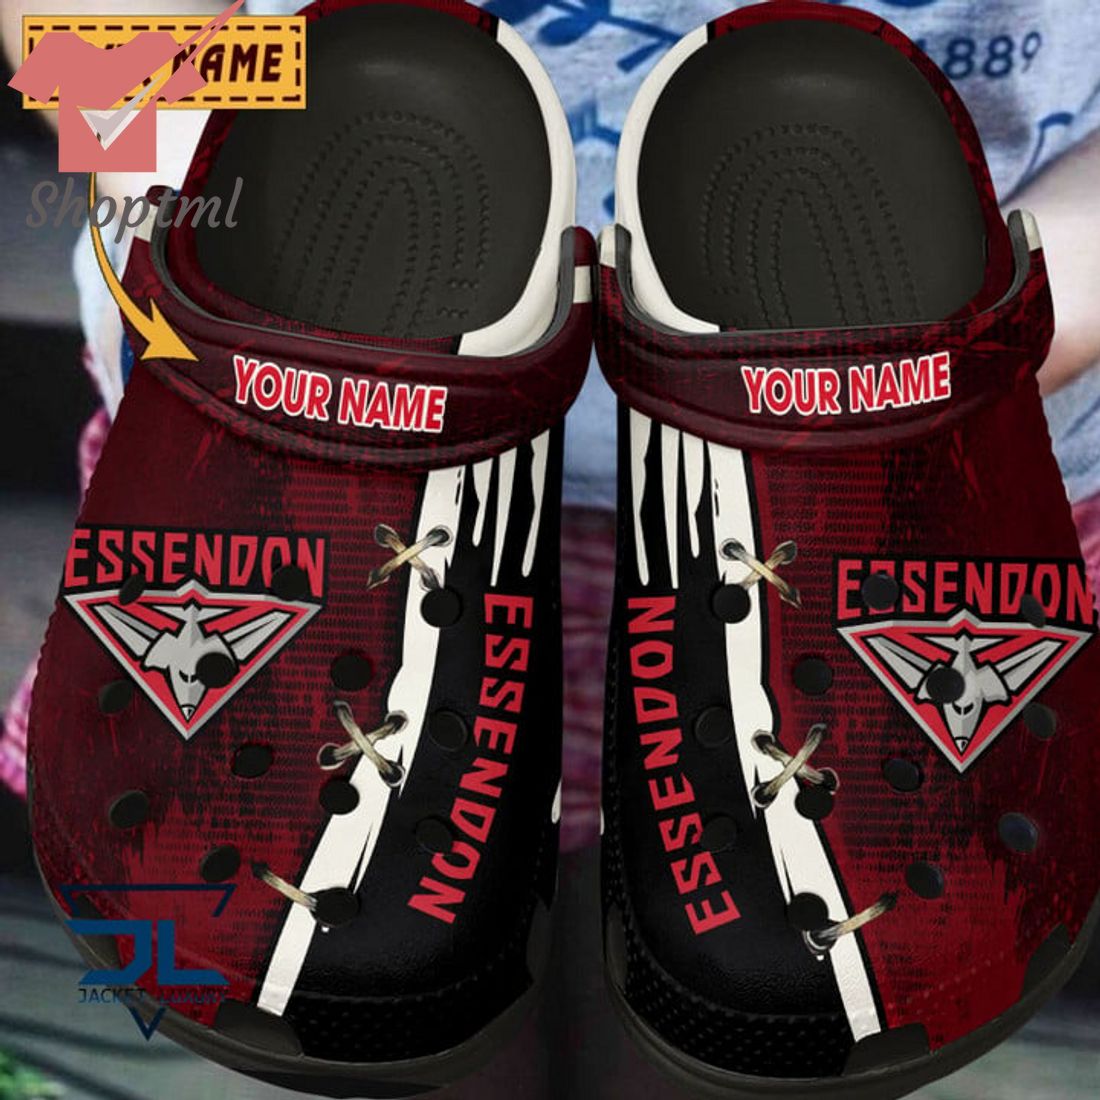 Essendon Football Club Custom Name Crocs Clog Shoes